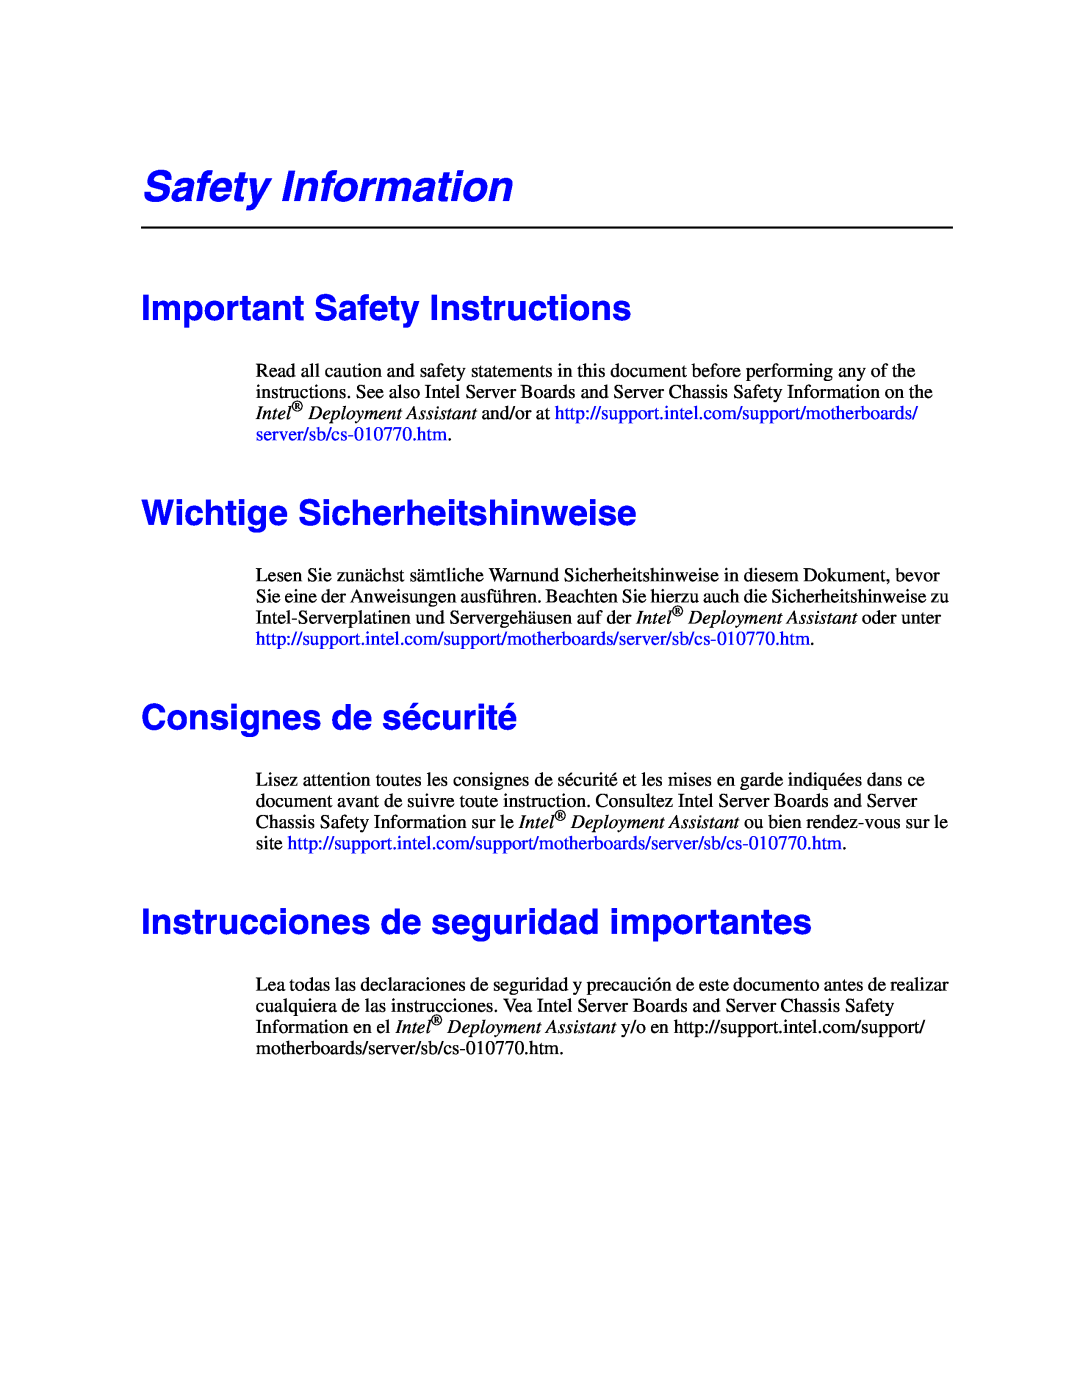 Intel S5000VSA Safety Information, Important Safety Instructions, Wichtige Sicherheitshinweise, Consignes de sécurité 